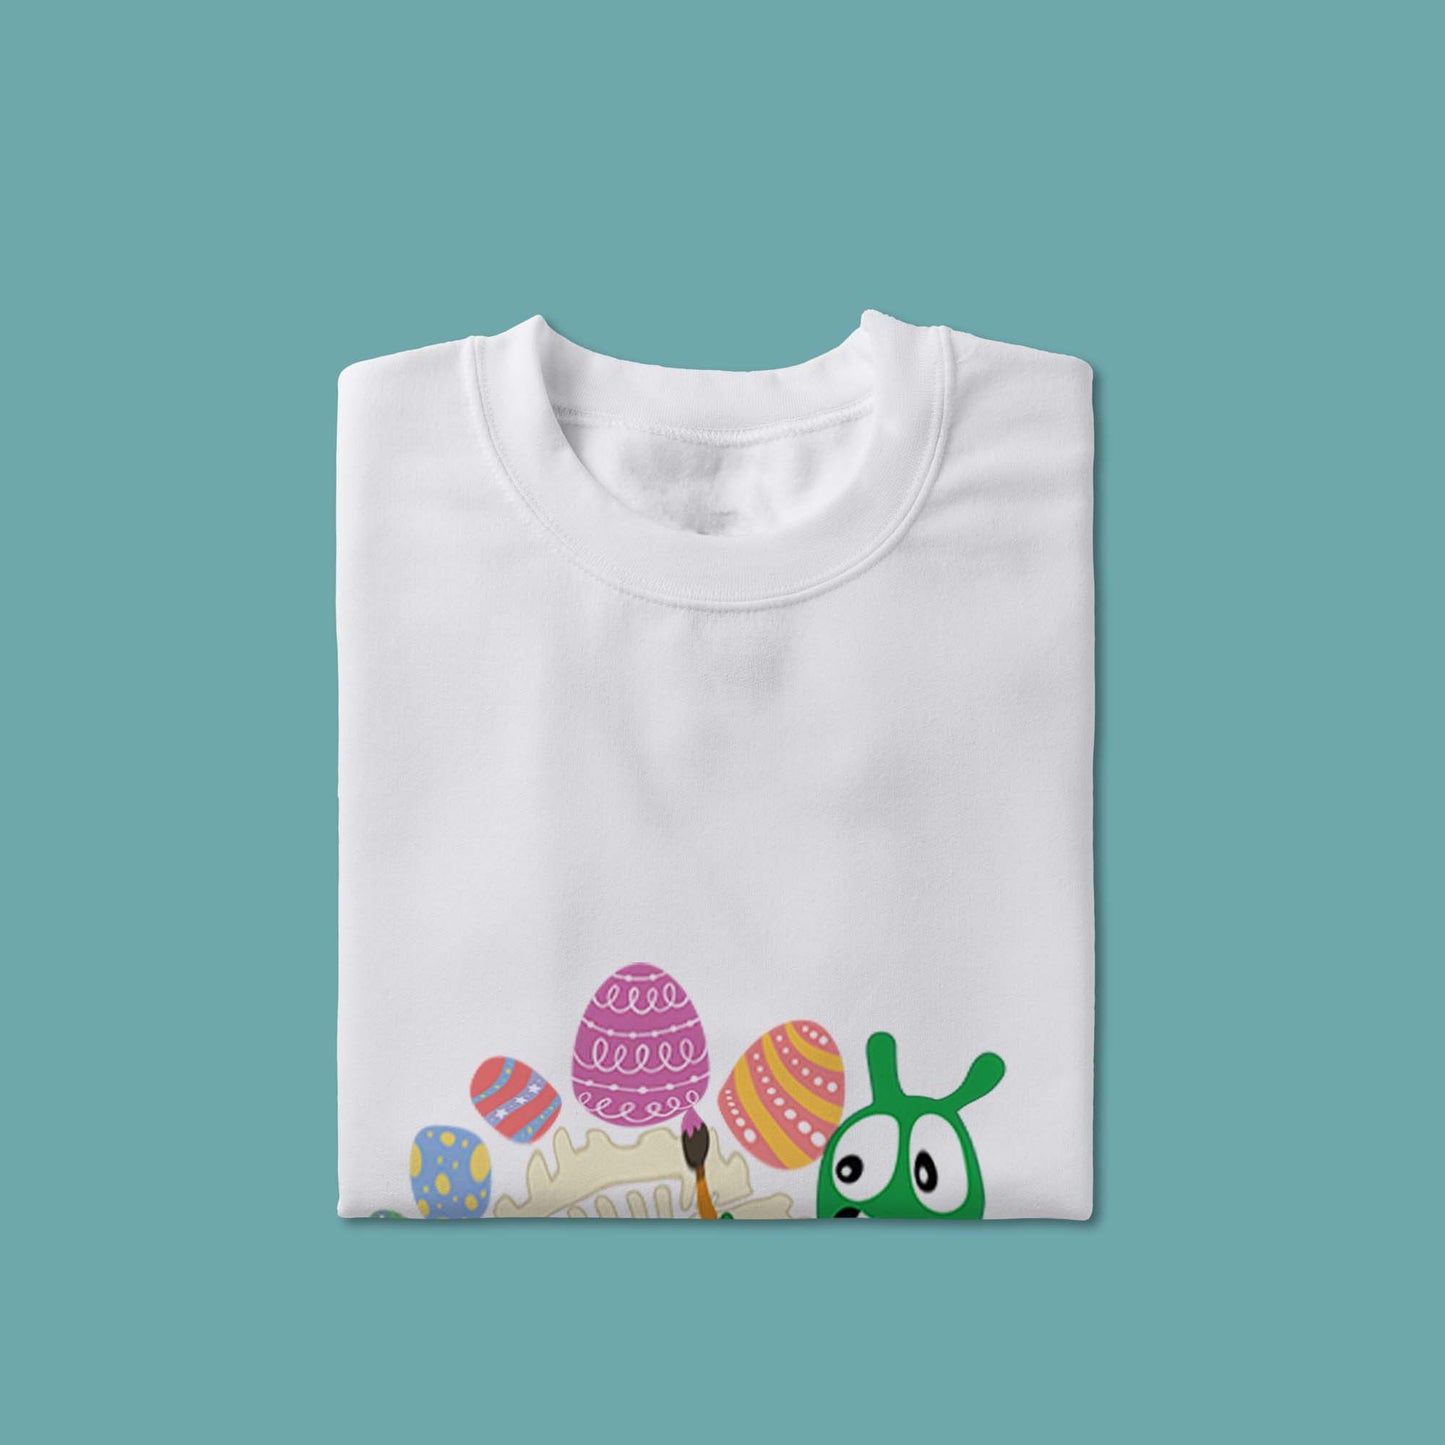 Eggasaurus Pea Pea Coloring Eggs - Camiseta para jóvenes